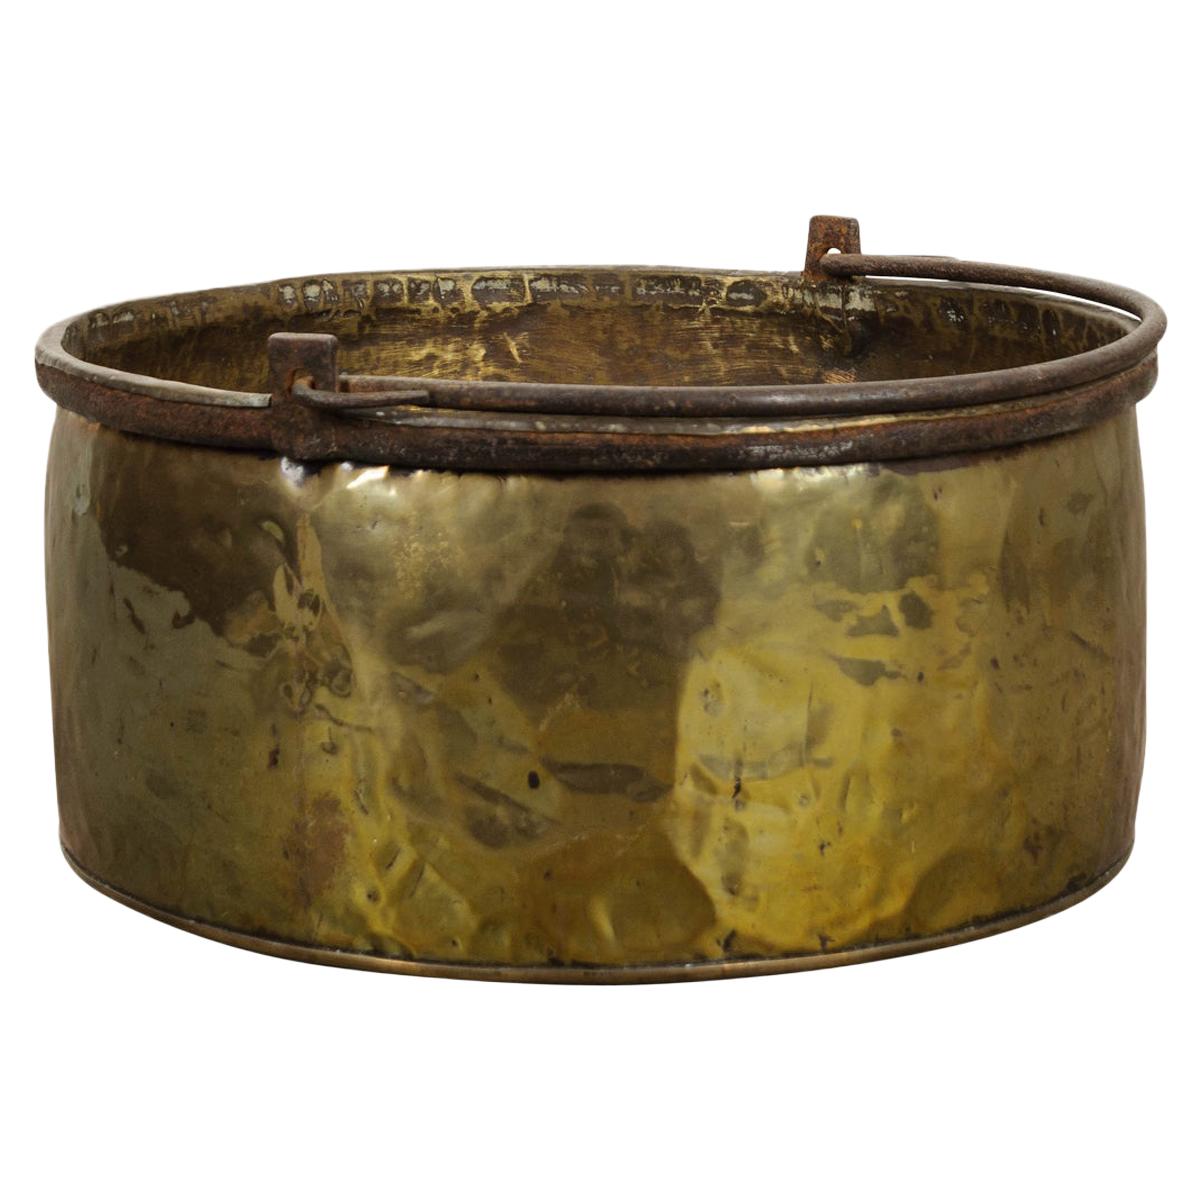 Grand pot en laiton de la fin du XIXe siècle